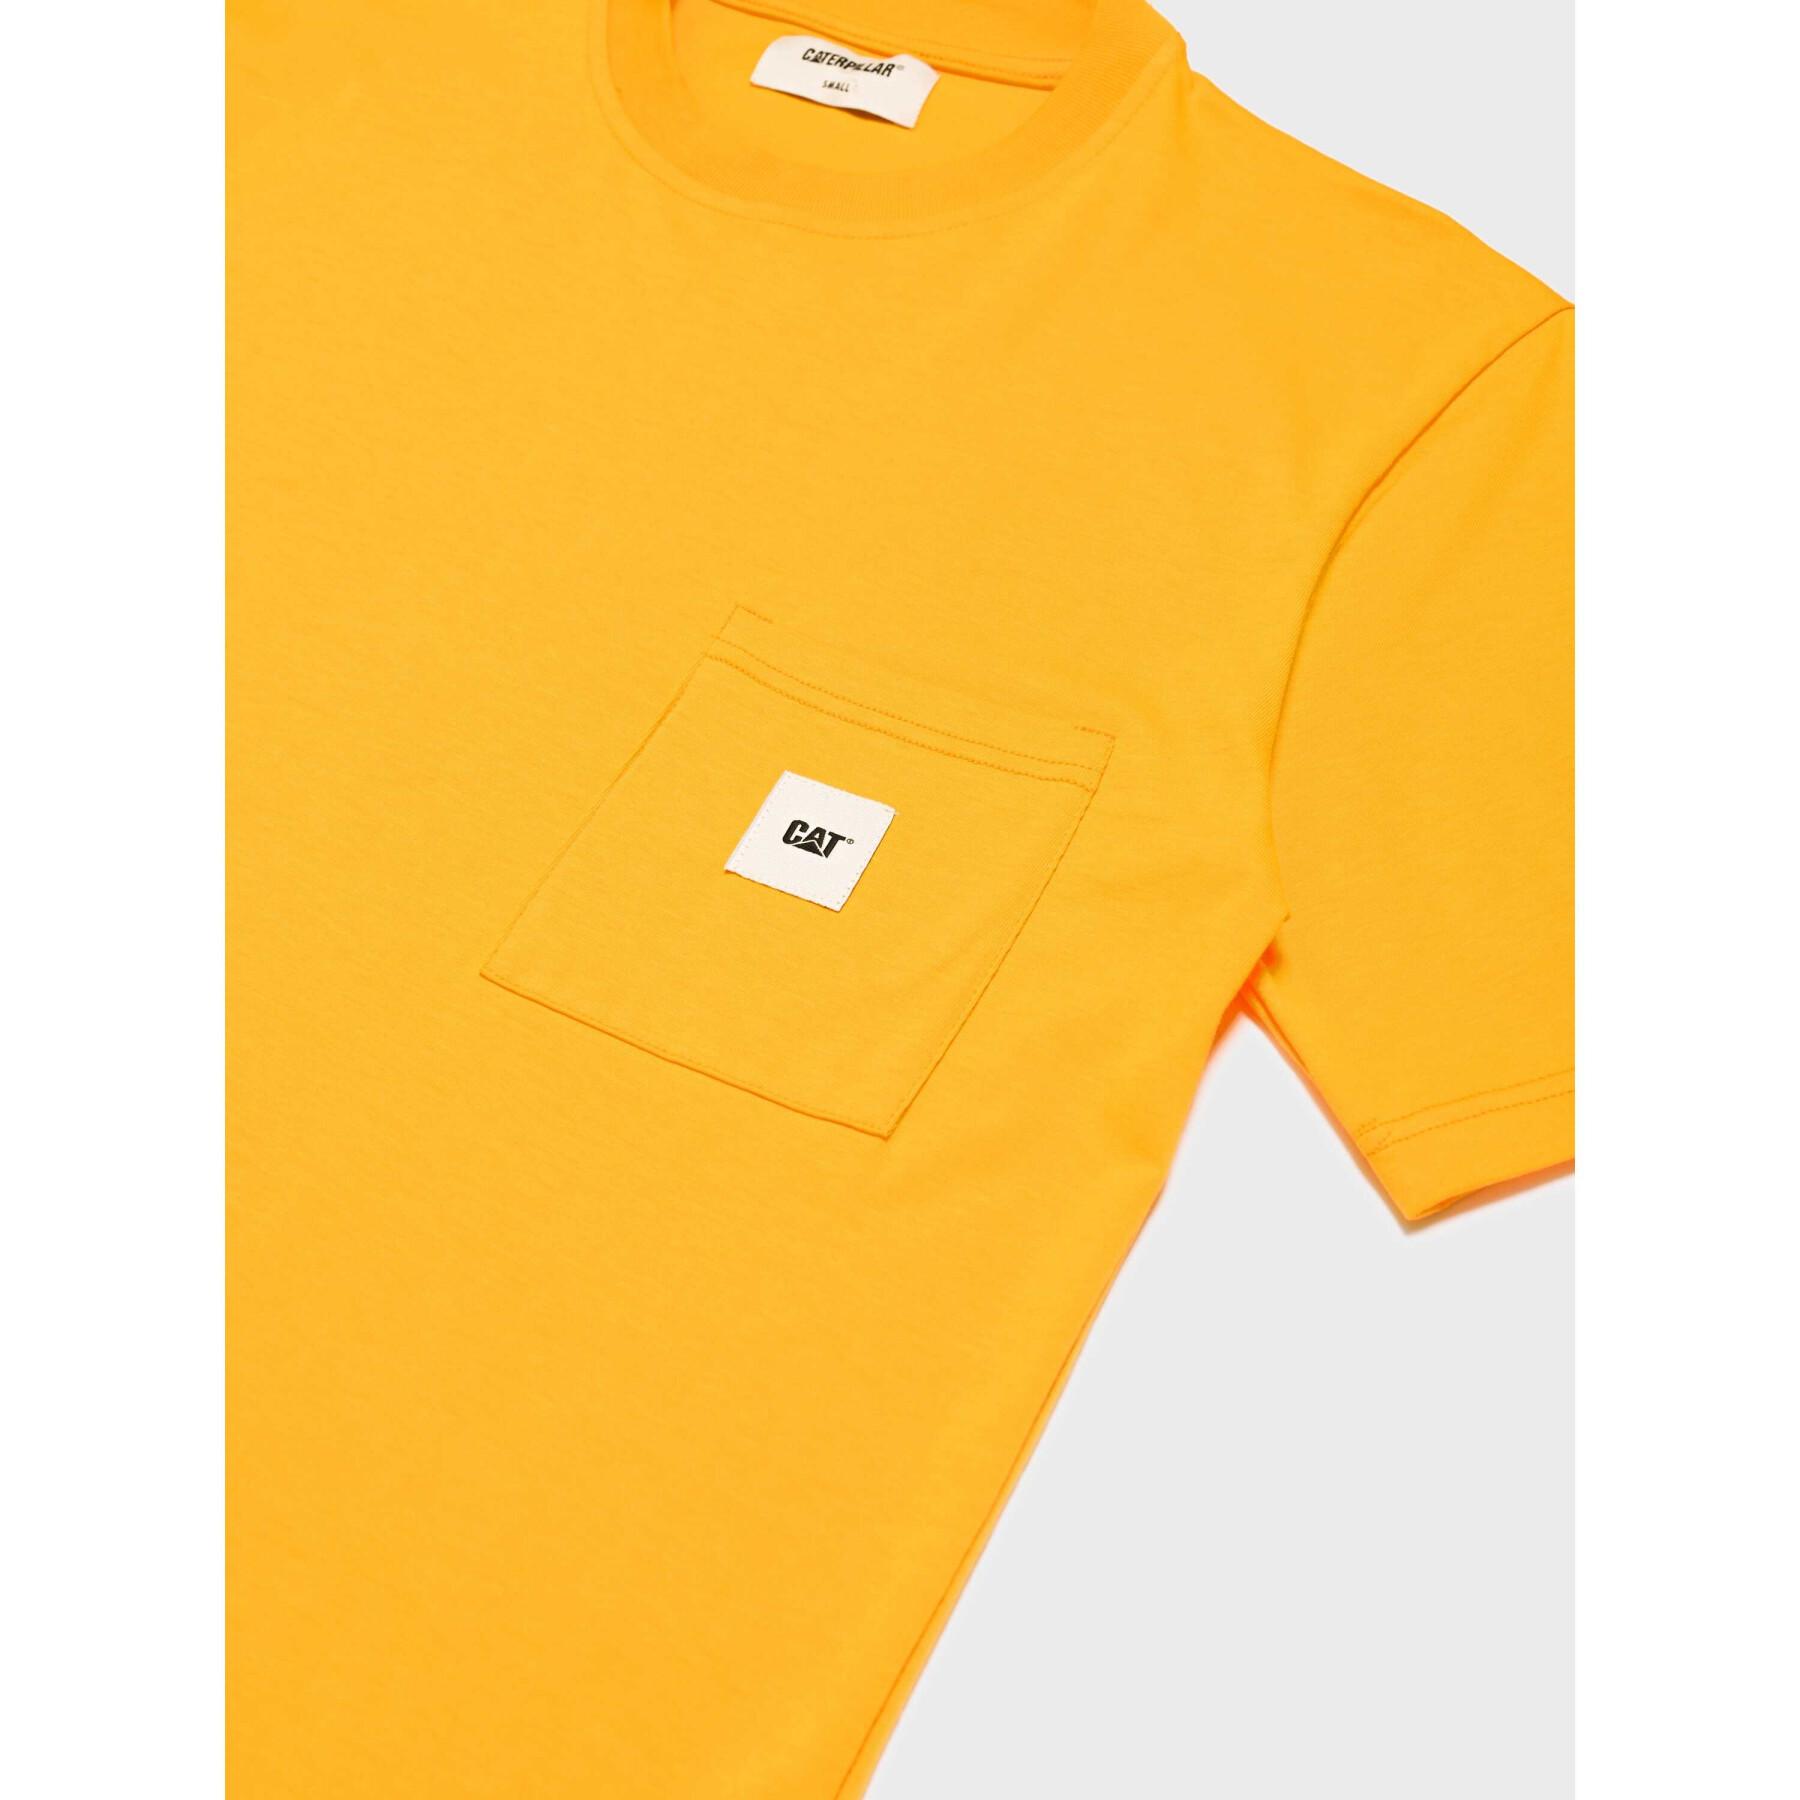 Caterpillar Basic pocket T-shirt